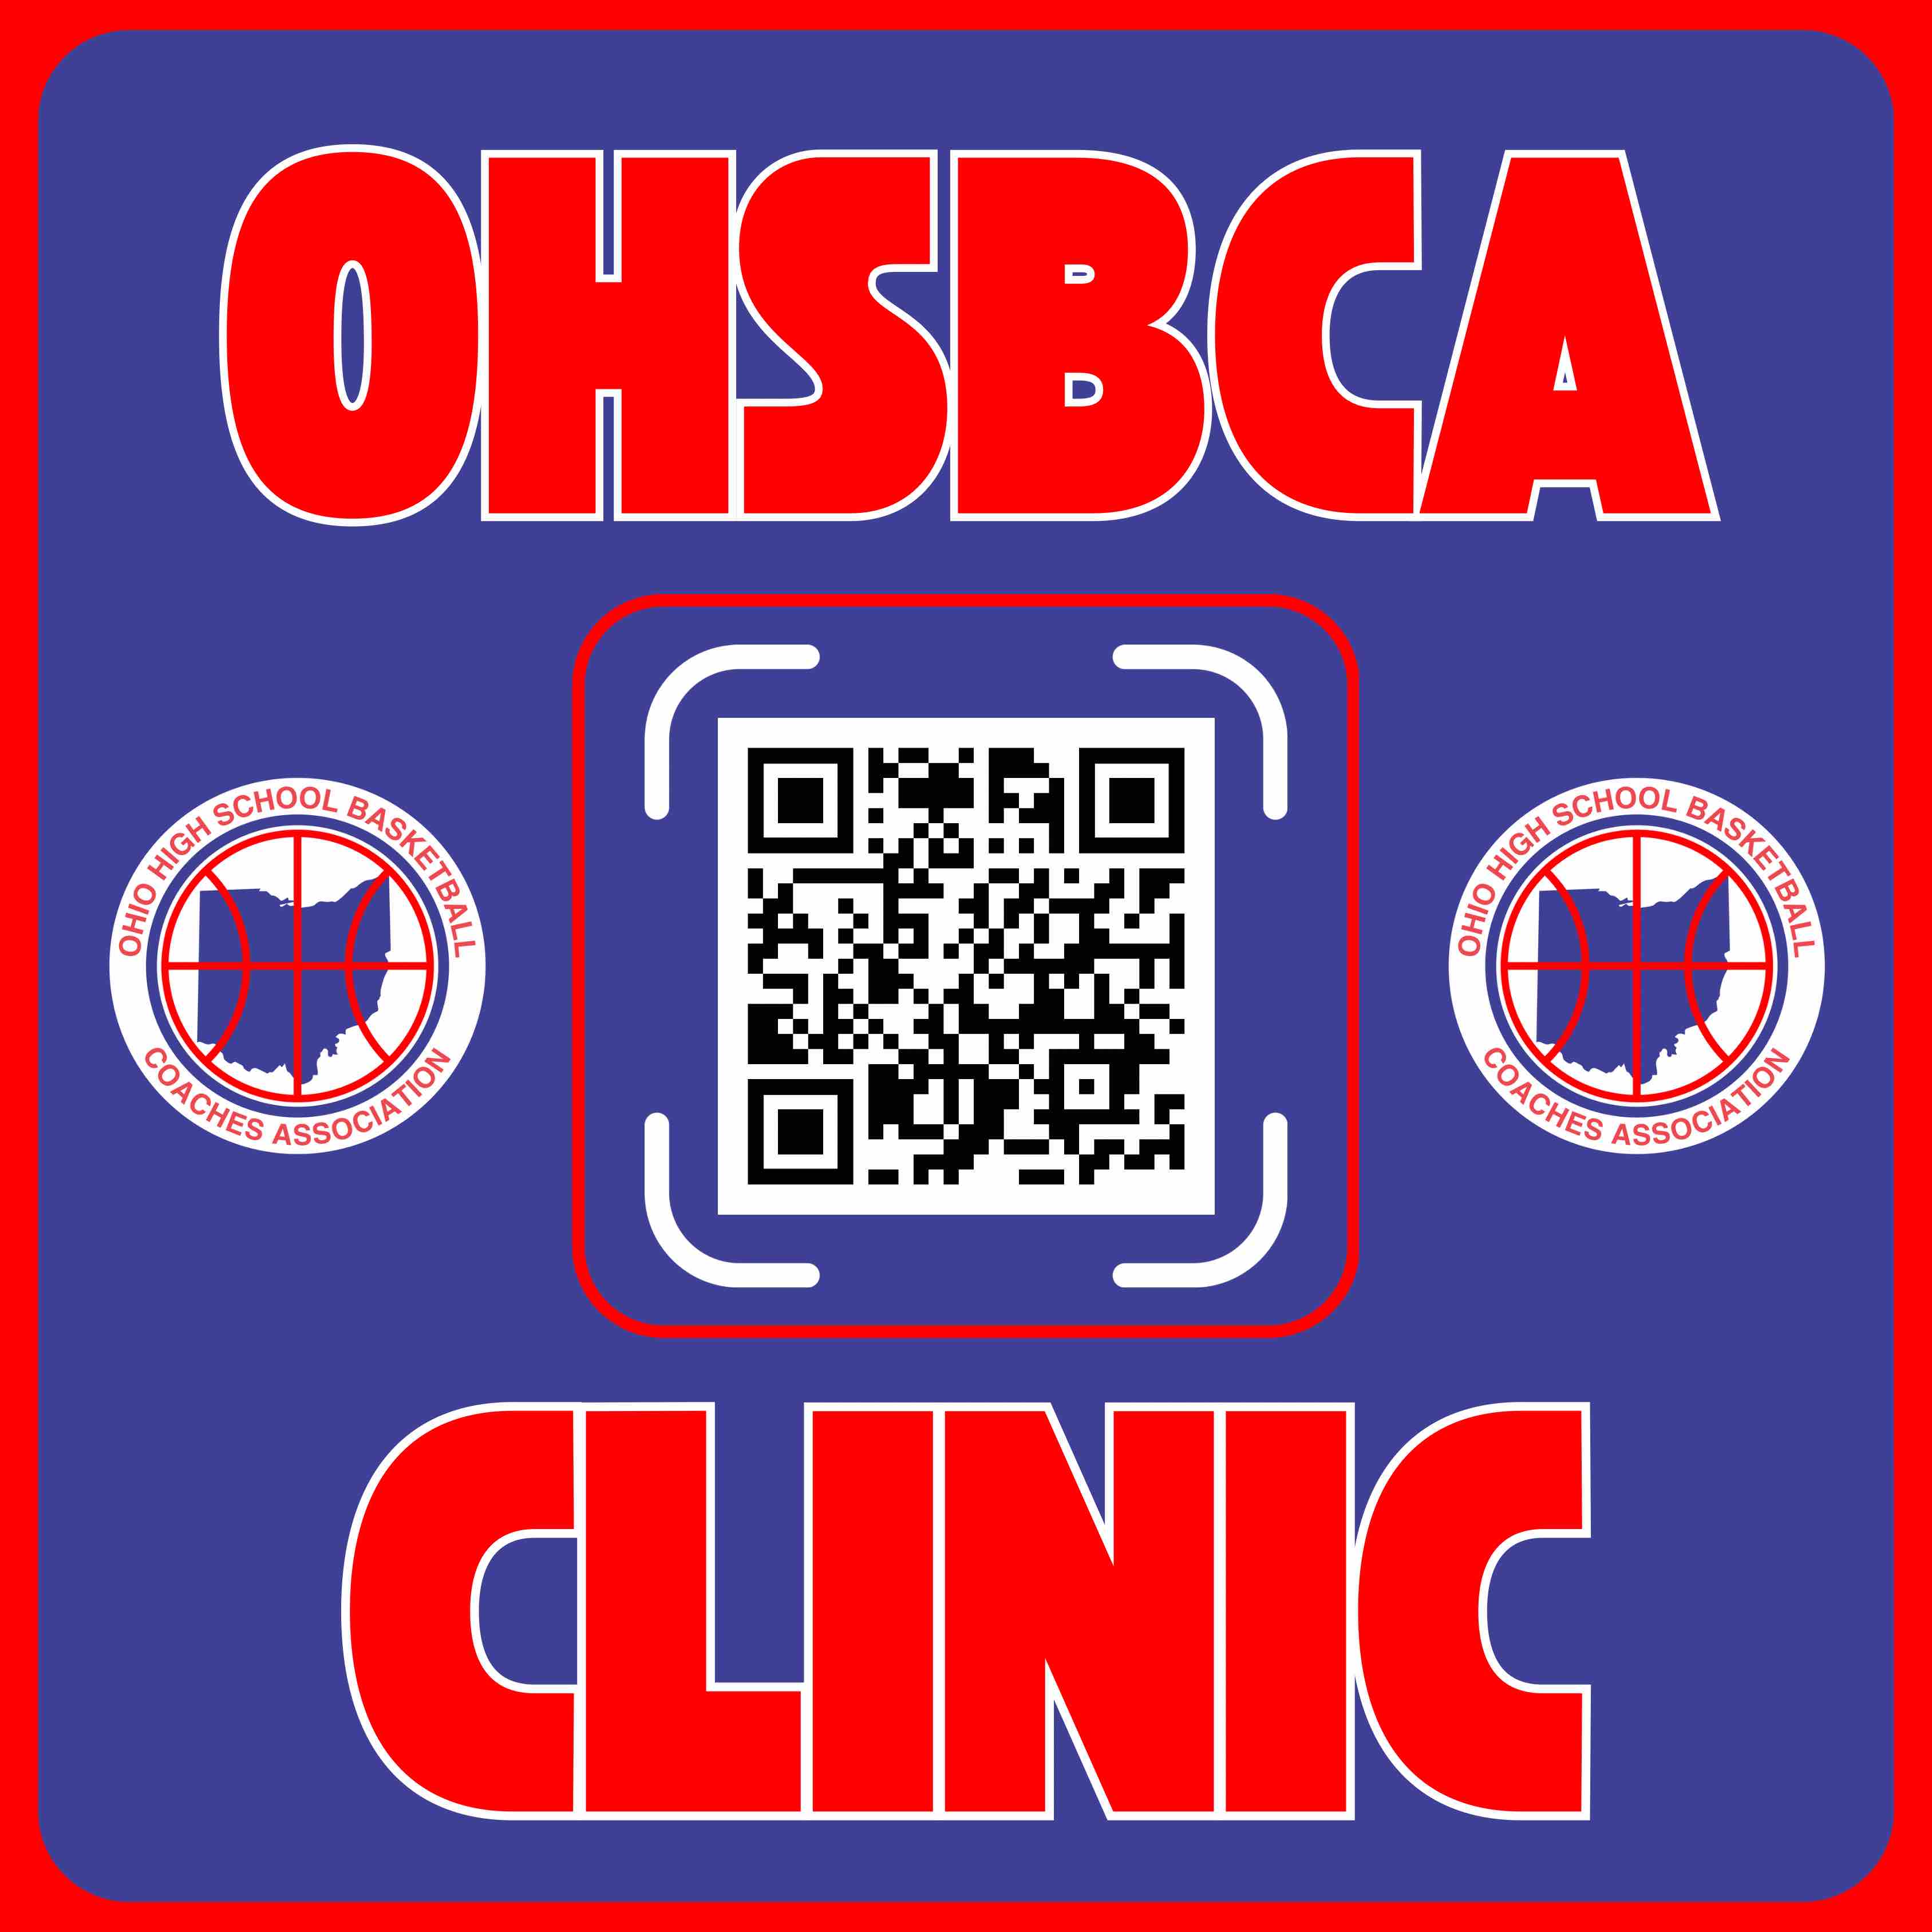 OHSBCA_Coaches_Clinic